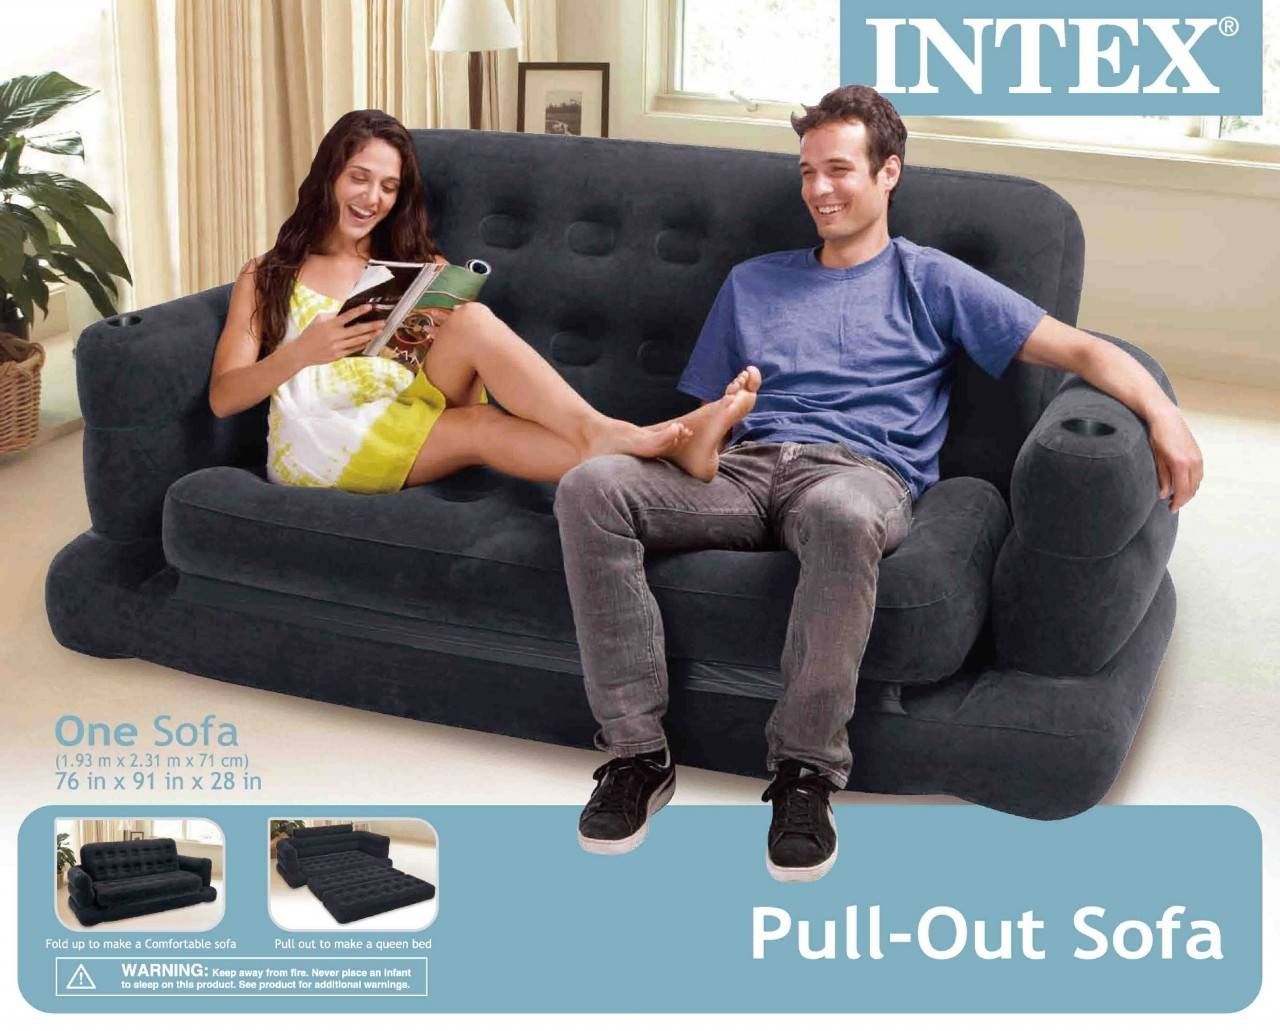 Intex Inflatable Pull Out Sofa And Queen Air Mattress Regarding Intex Air Sofa Beds (View 2 of 15)